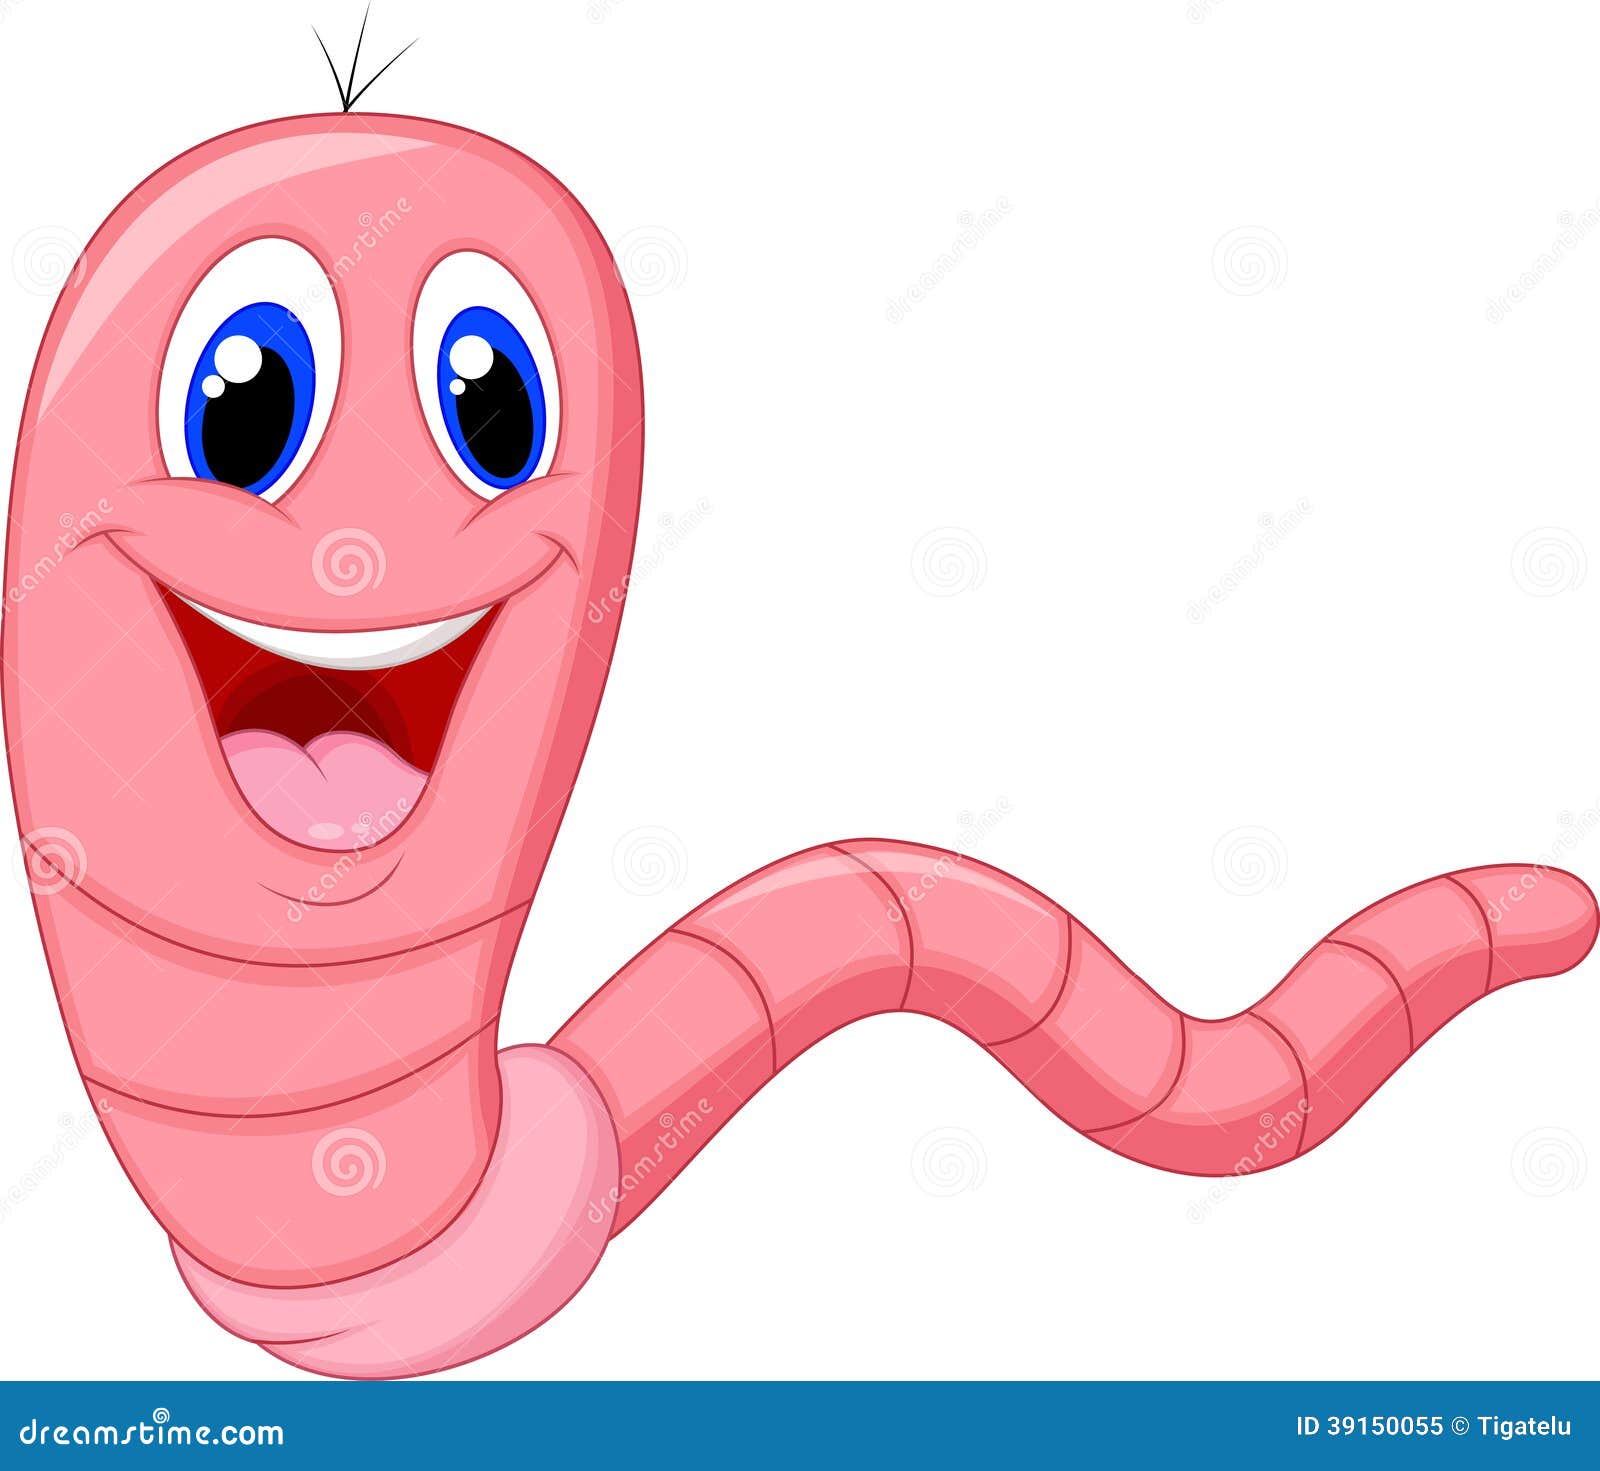 cute pink worm cartoon